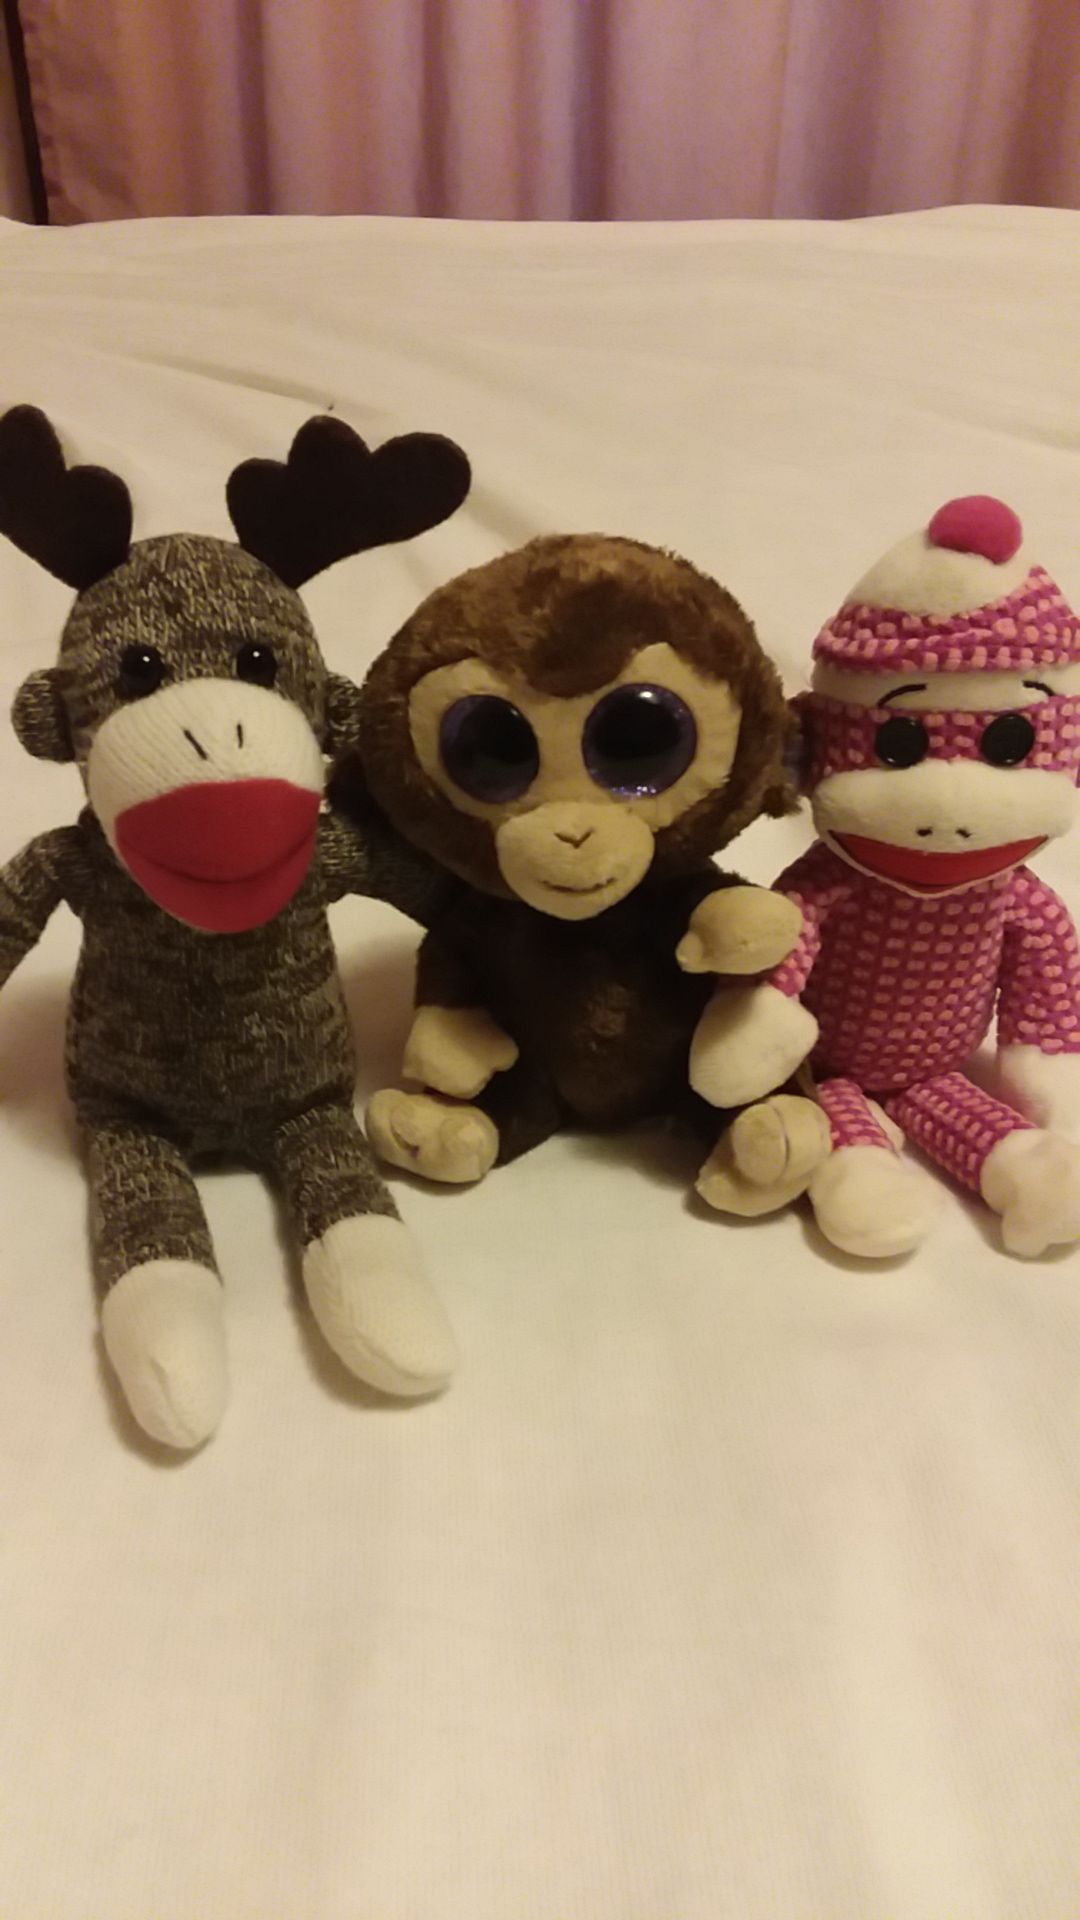 3 brand new Ty stuffed animals